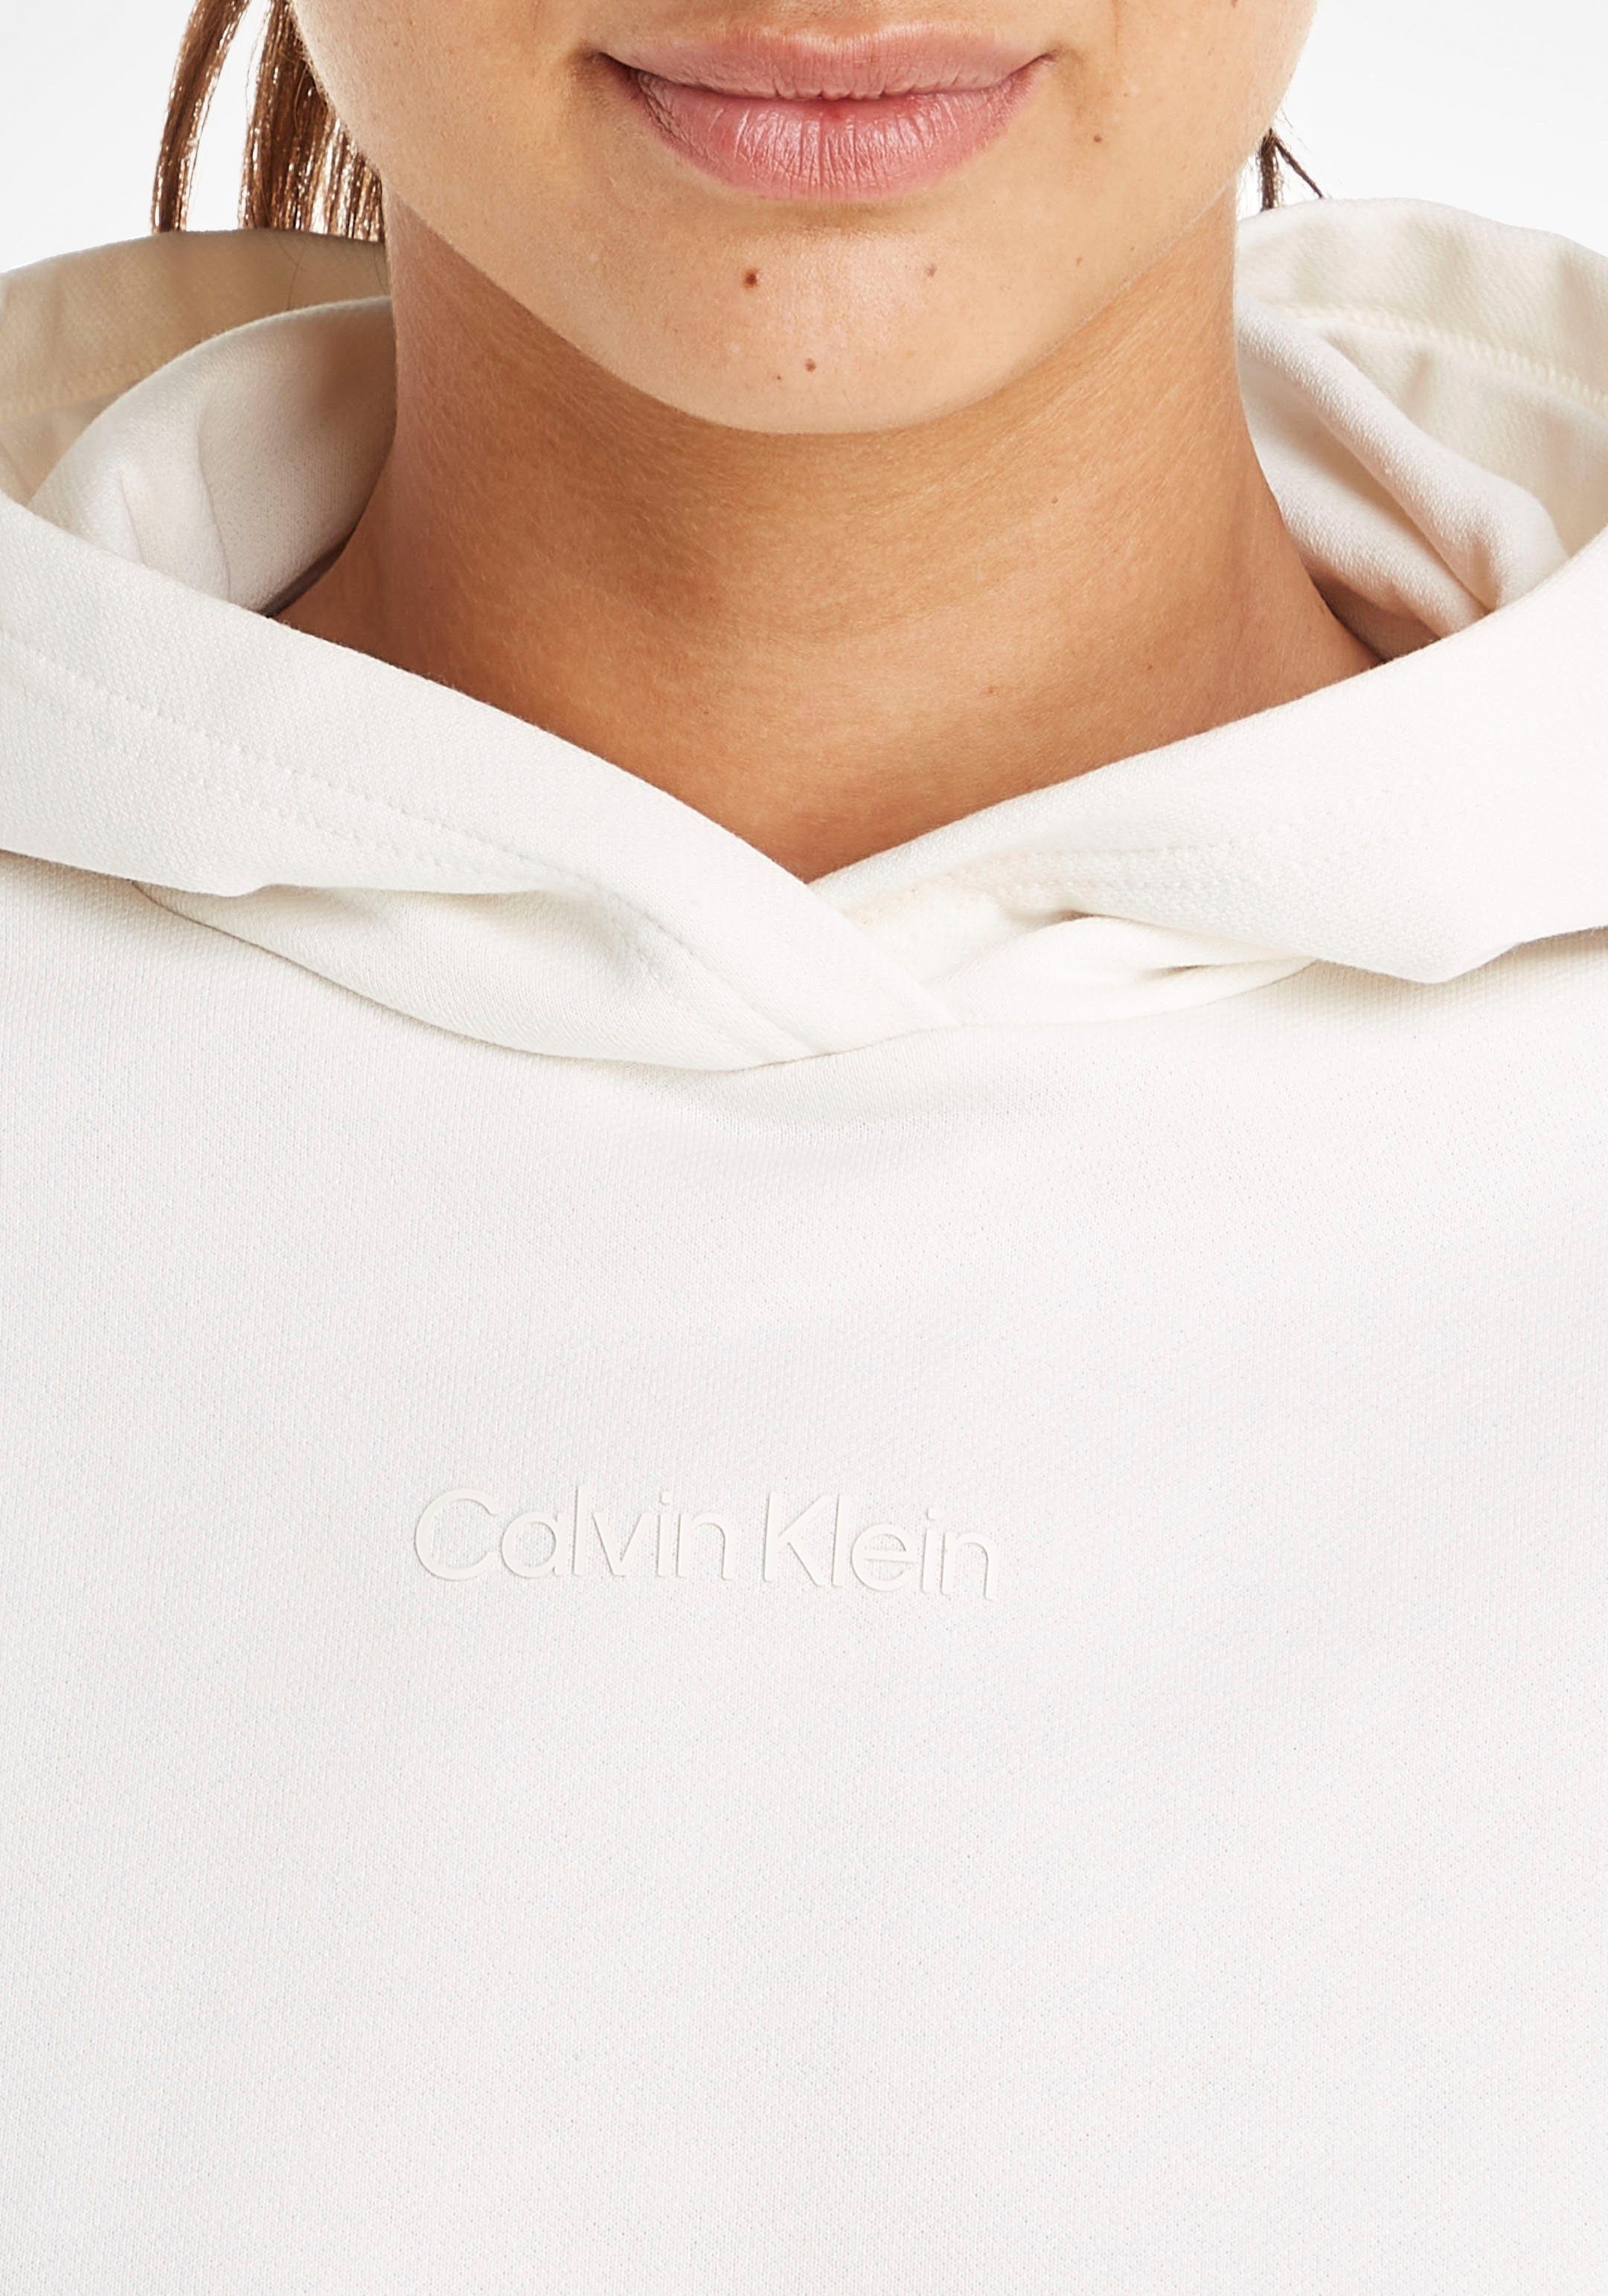 Calvin Klein Sport Sweatshirt - PW Hoodie Kapuzensweatshirt weiß